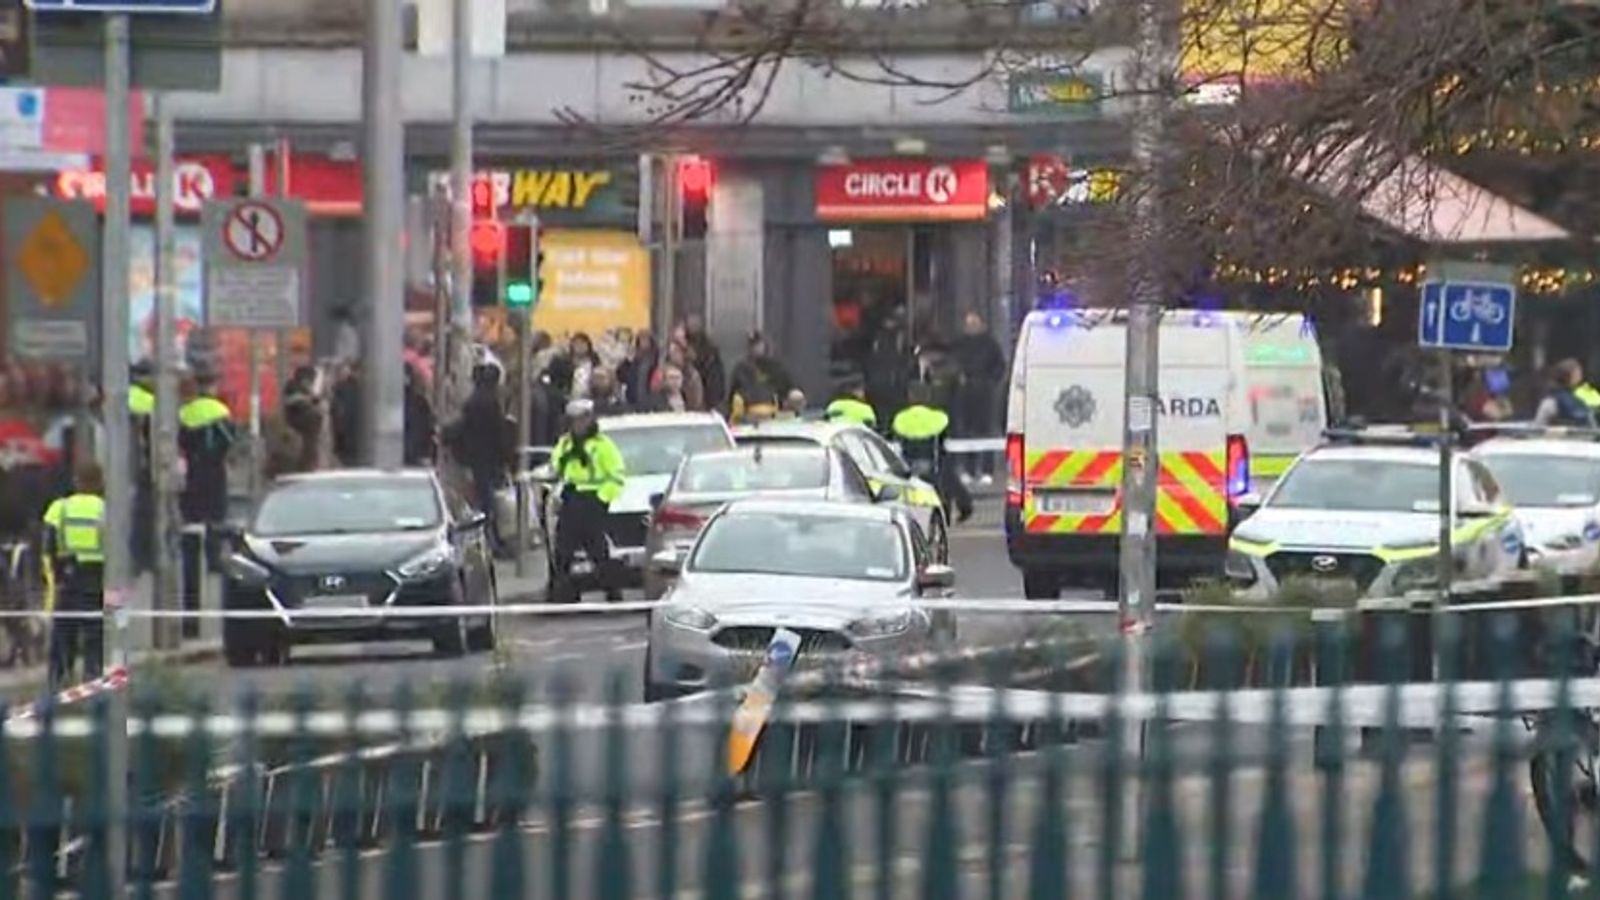 Several children injured in stabbing outside a school in Dublin